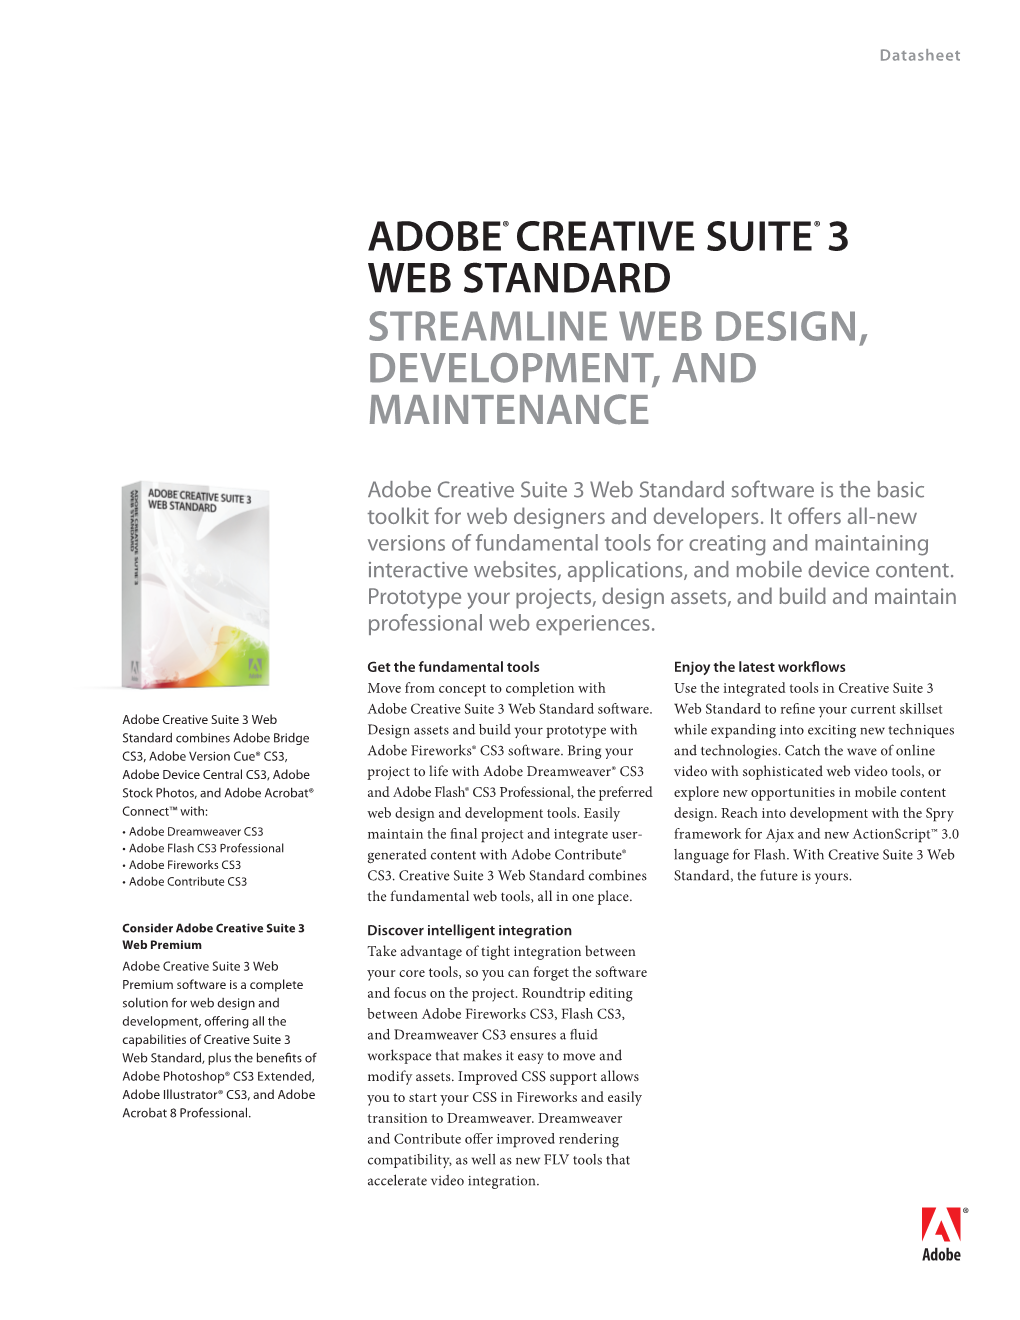 ADOBE® CREATIVE SUITE® 3 WEB STANDARD Streamline Web Design, Development, and Maintenance